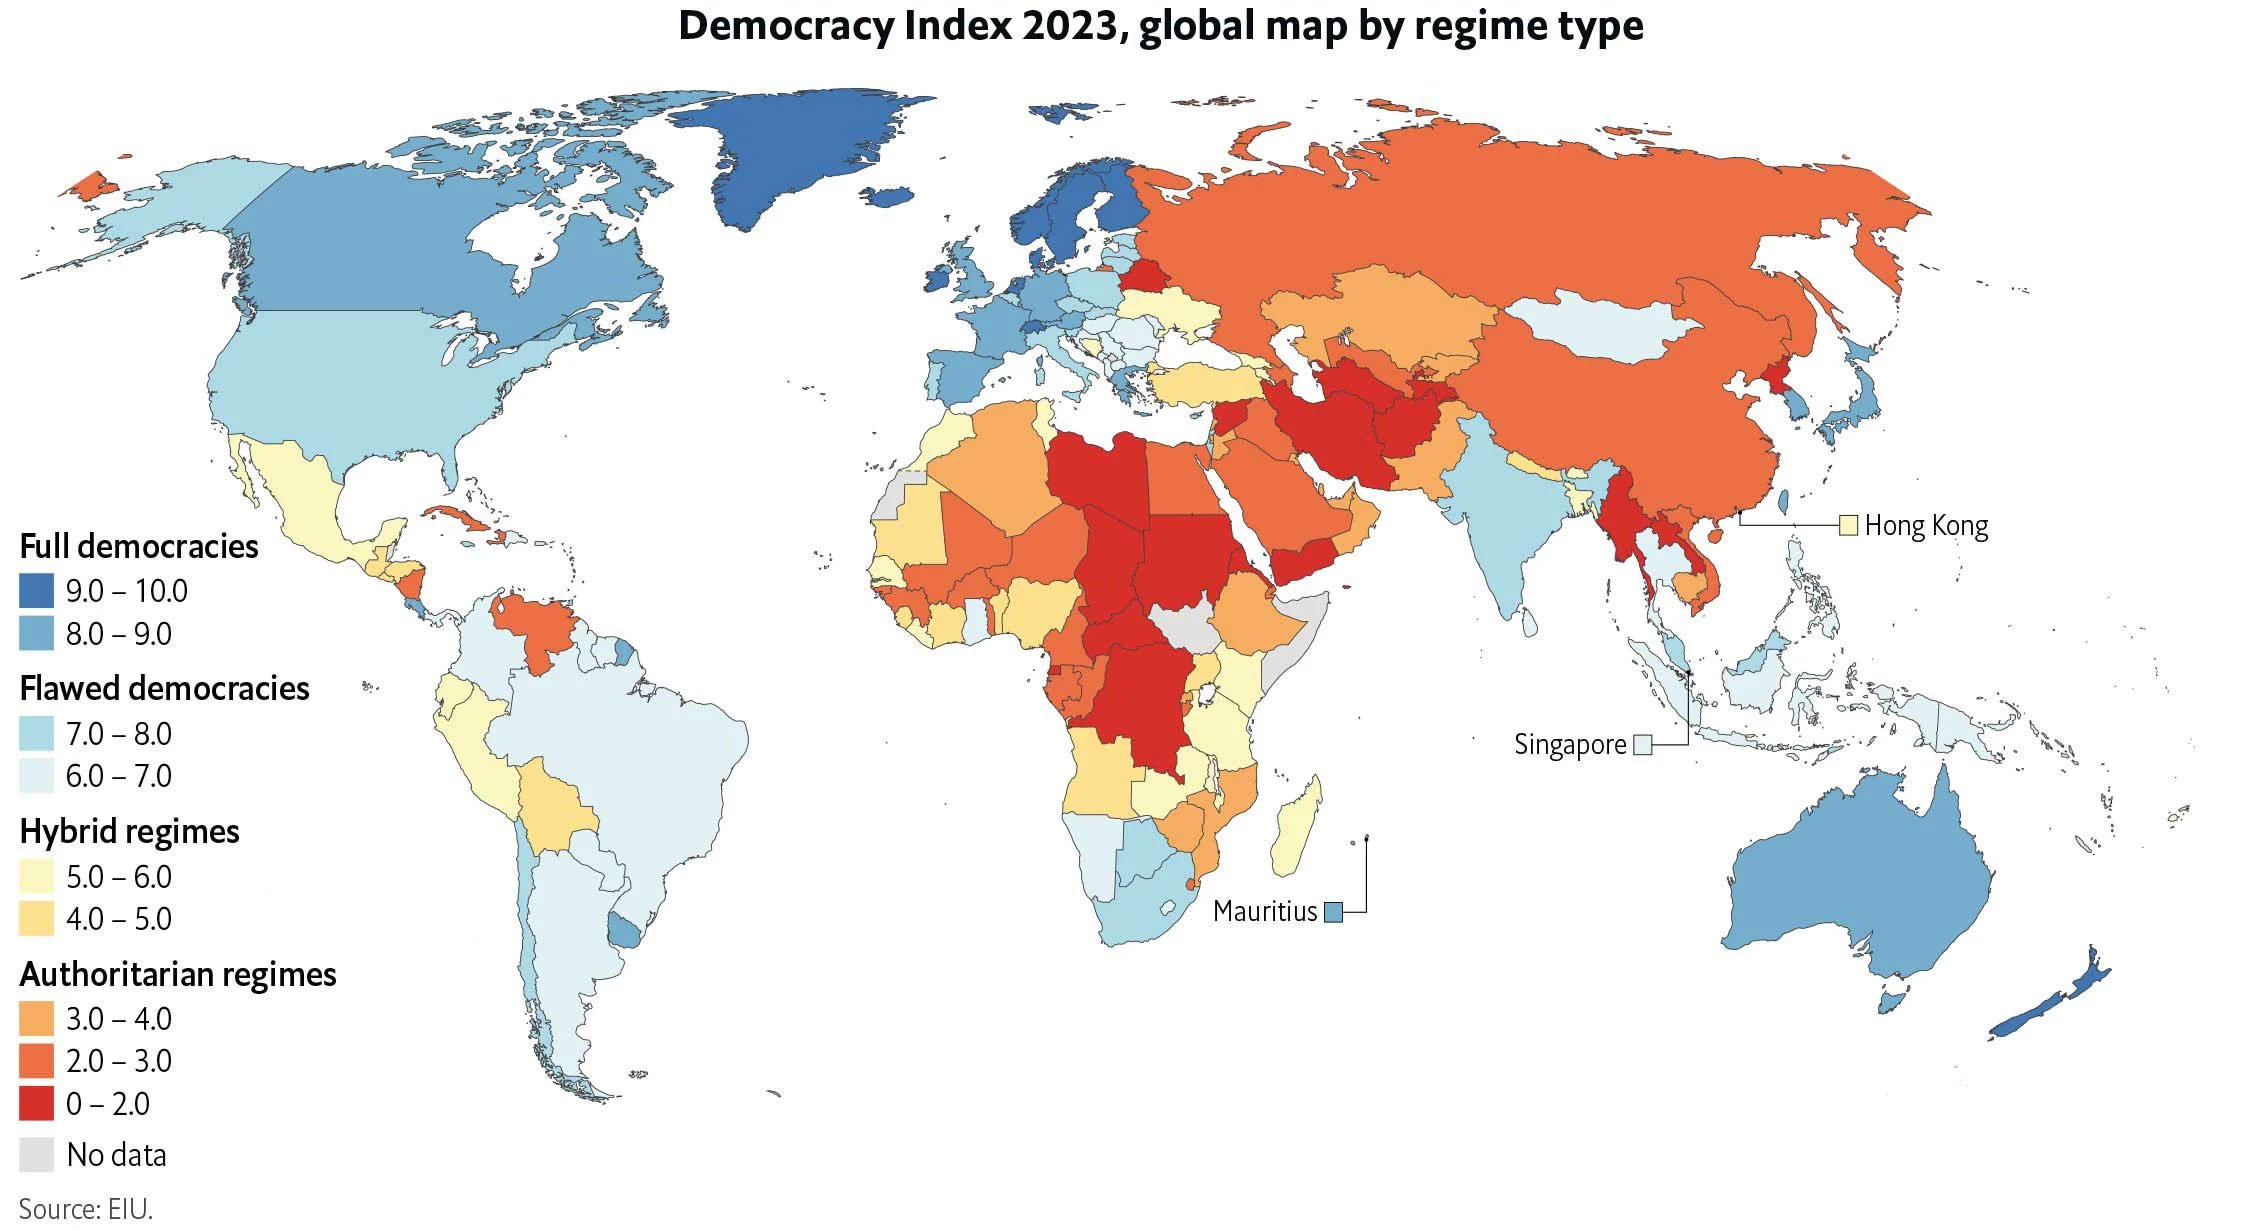 Pakistan downgraded to authoritarian regime on Democracy Index